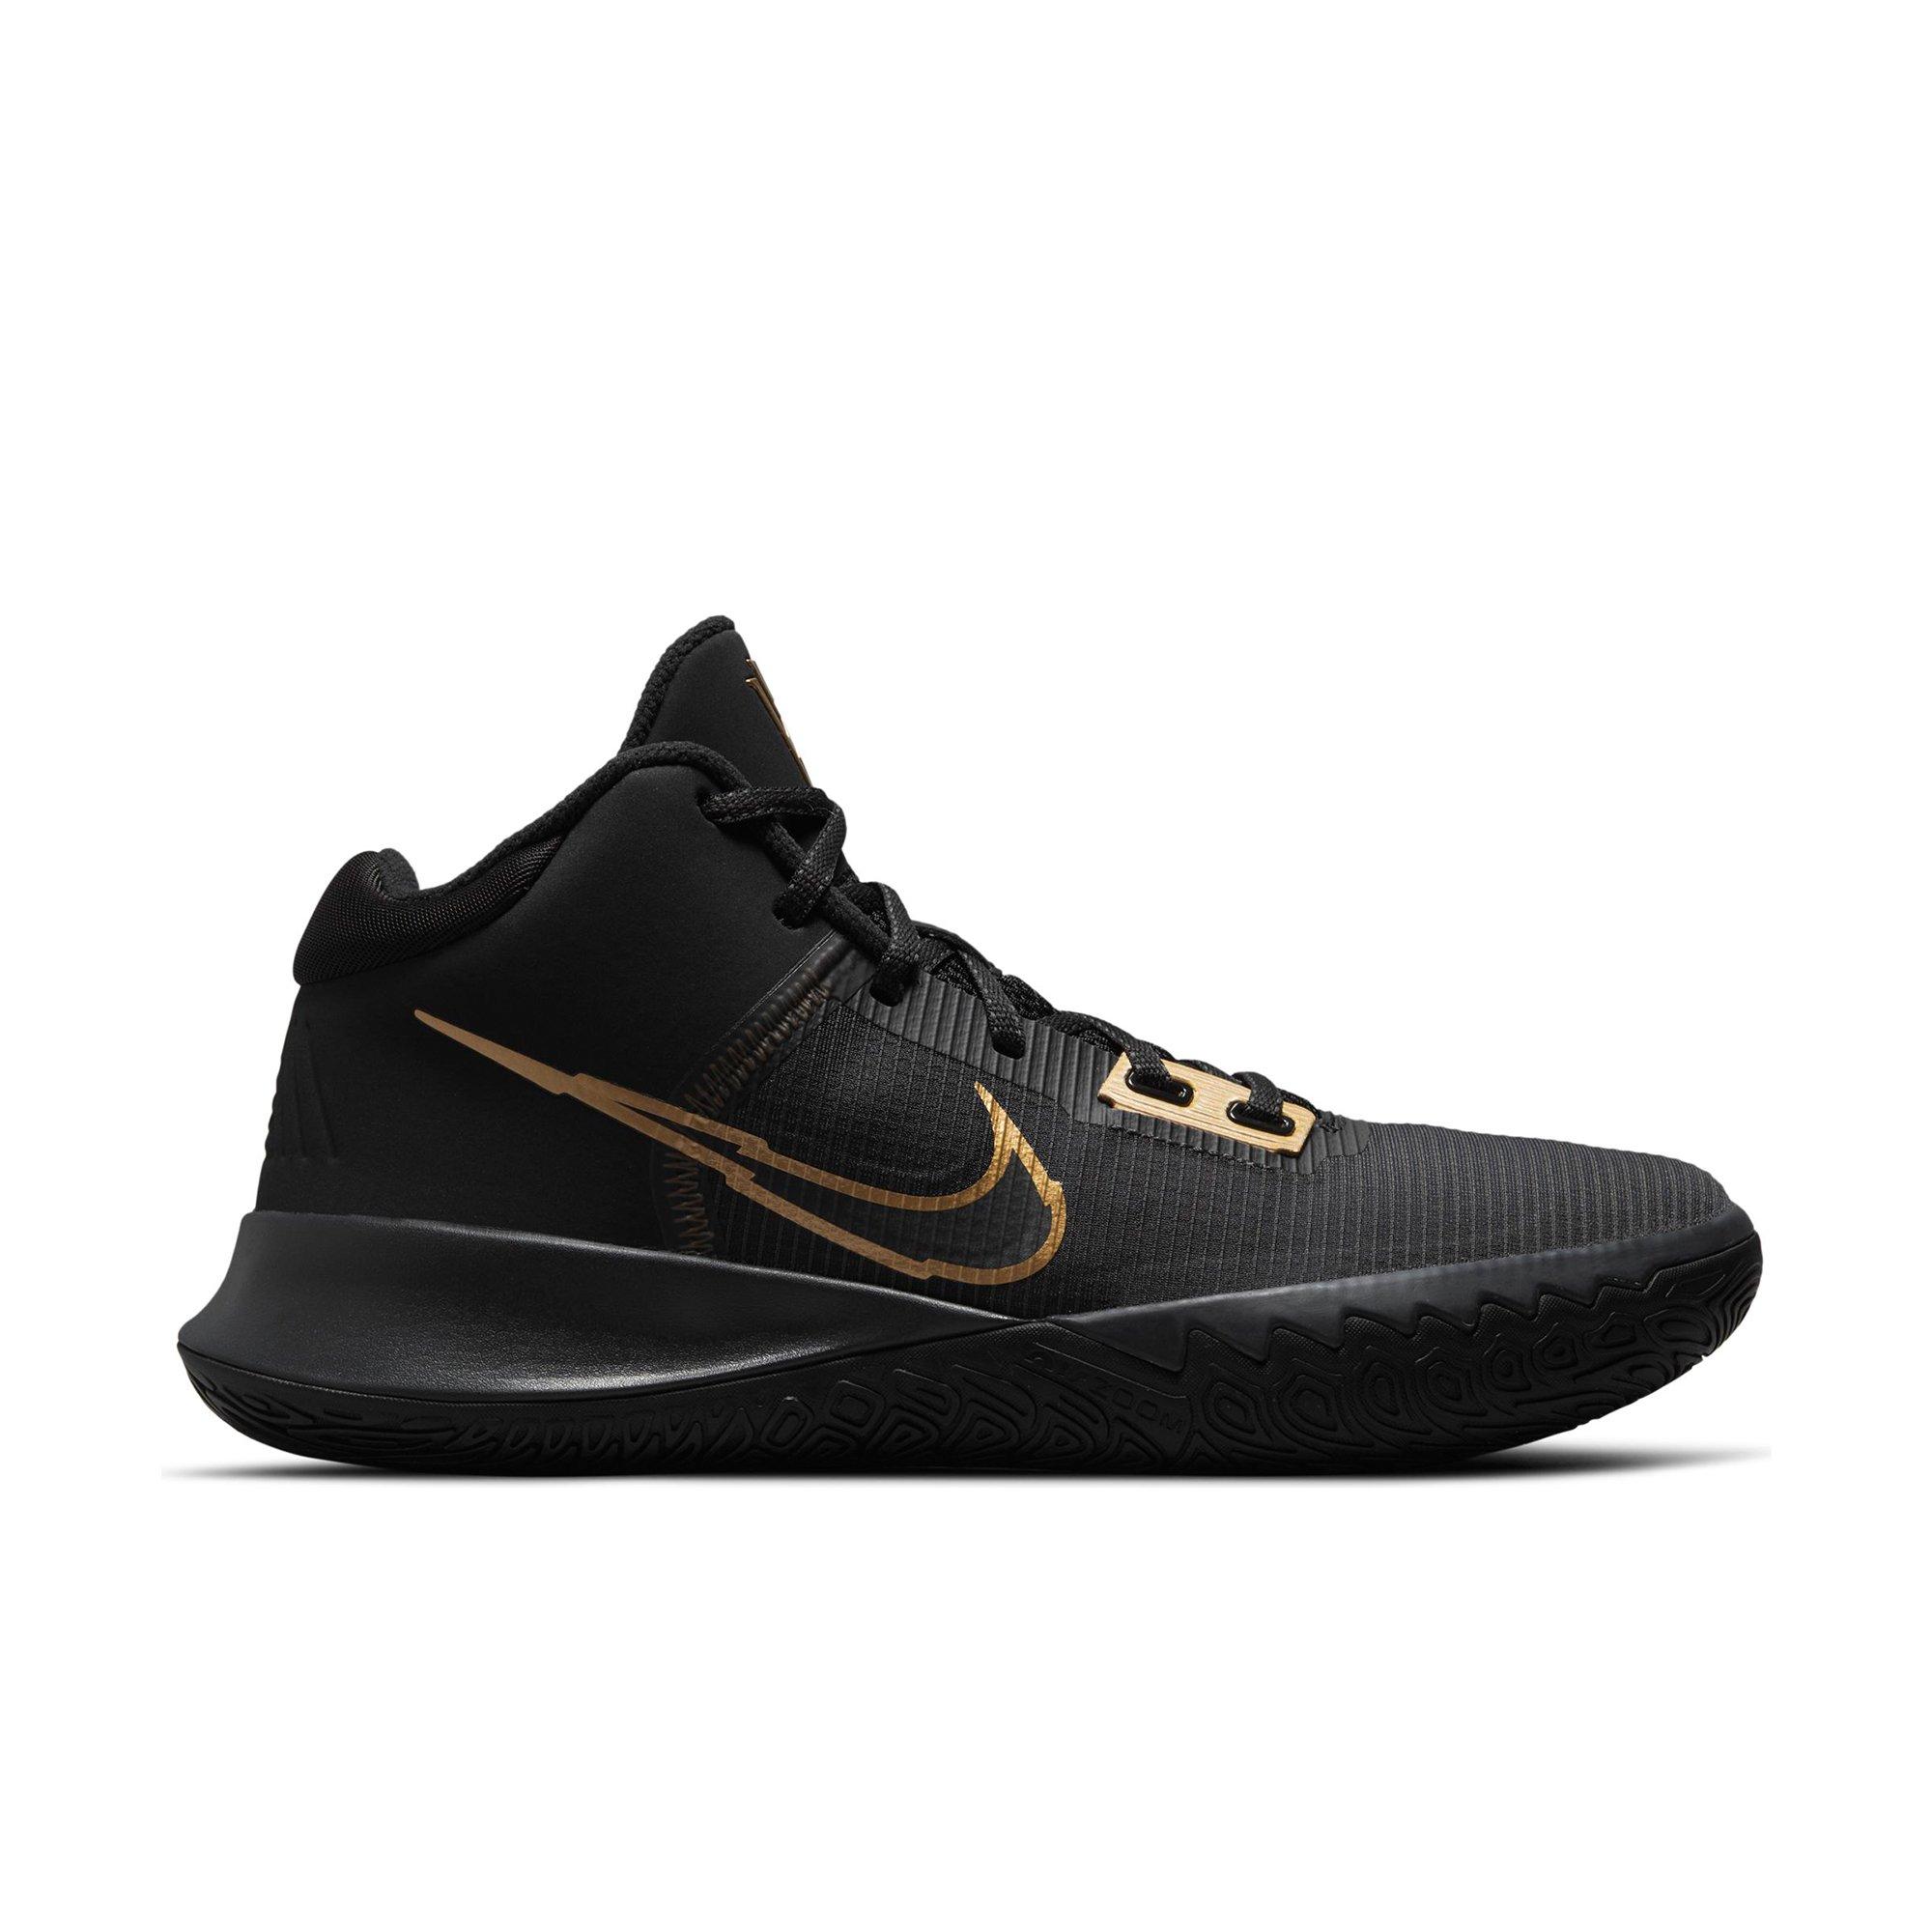 Black And Gold Nike Youth Basketball Shoes | lupon.gov.ph